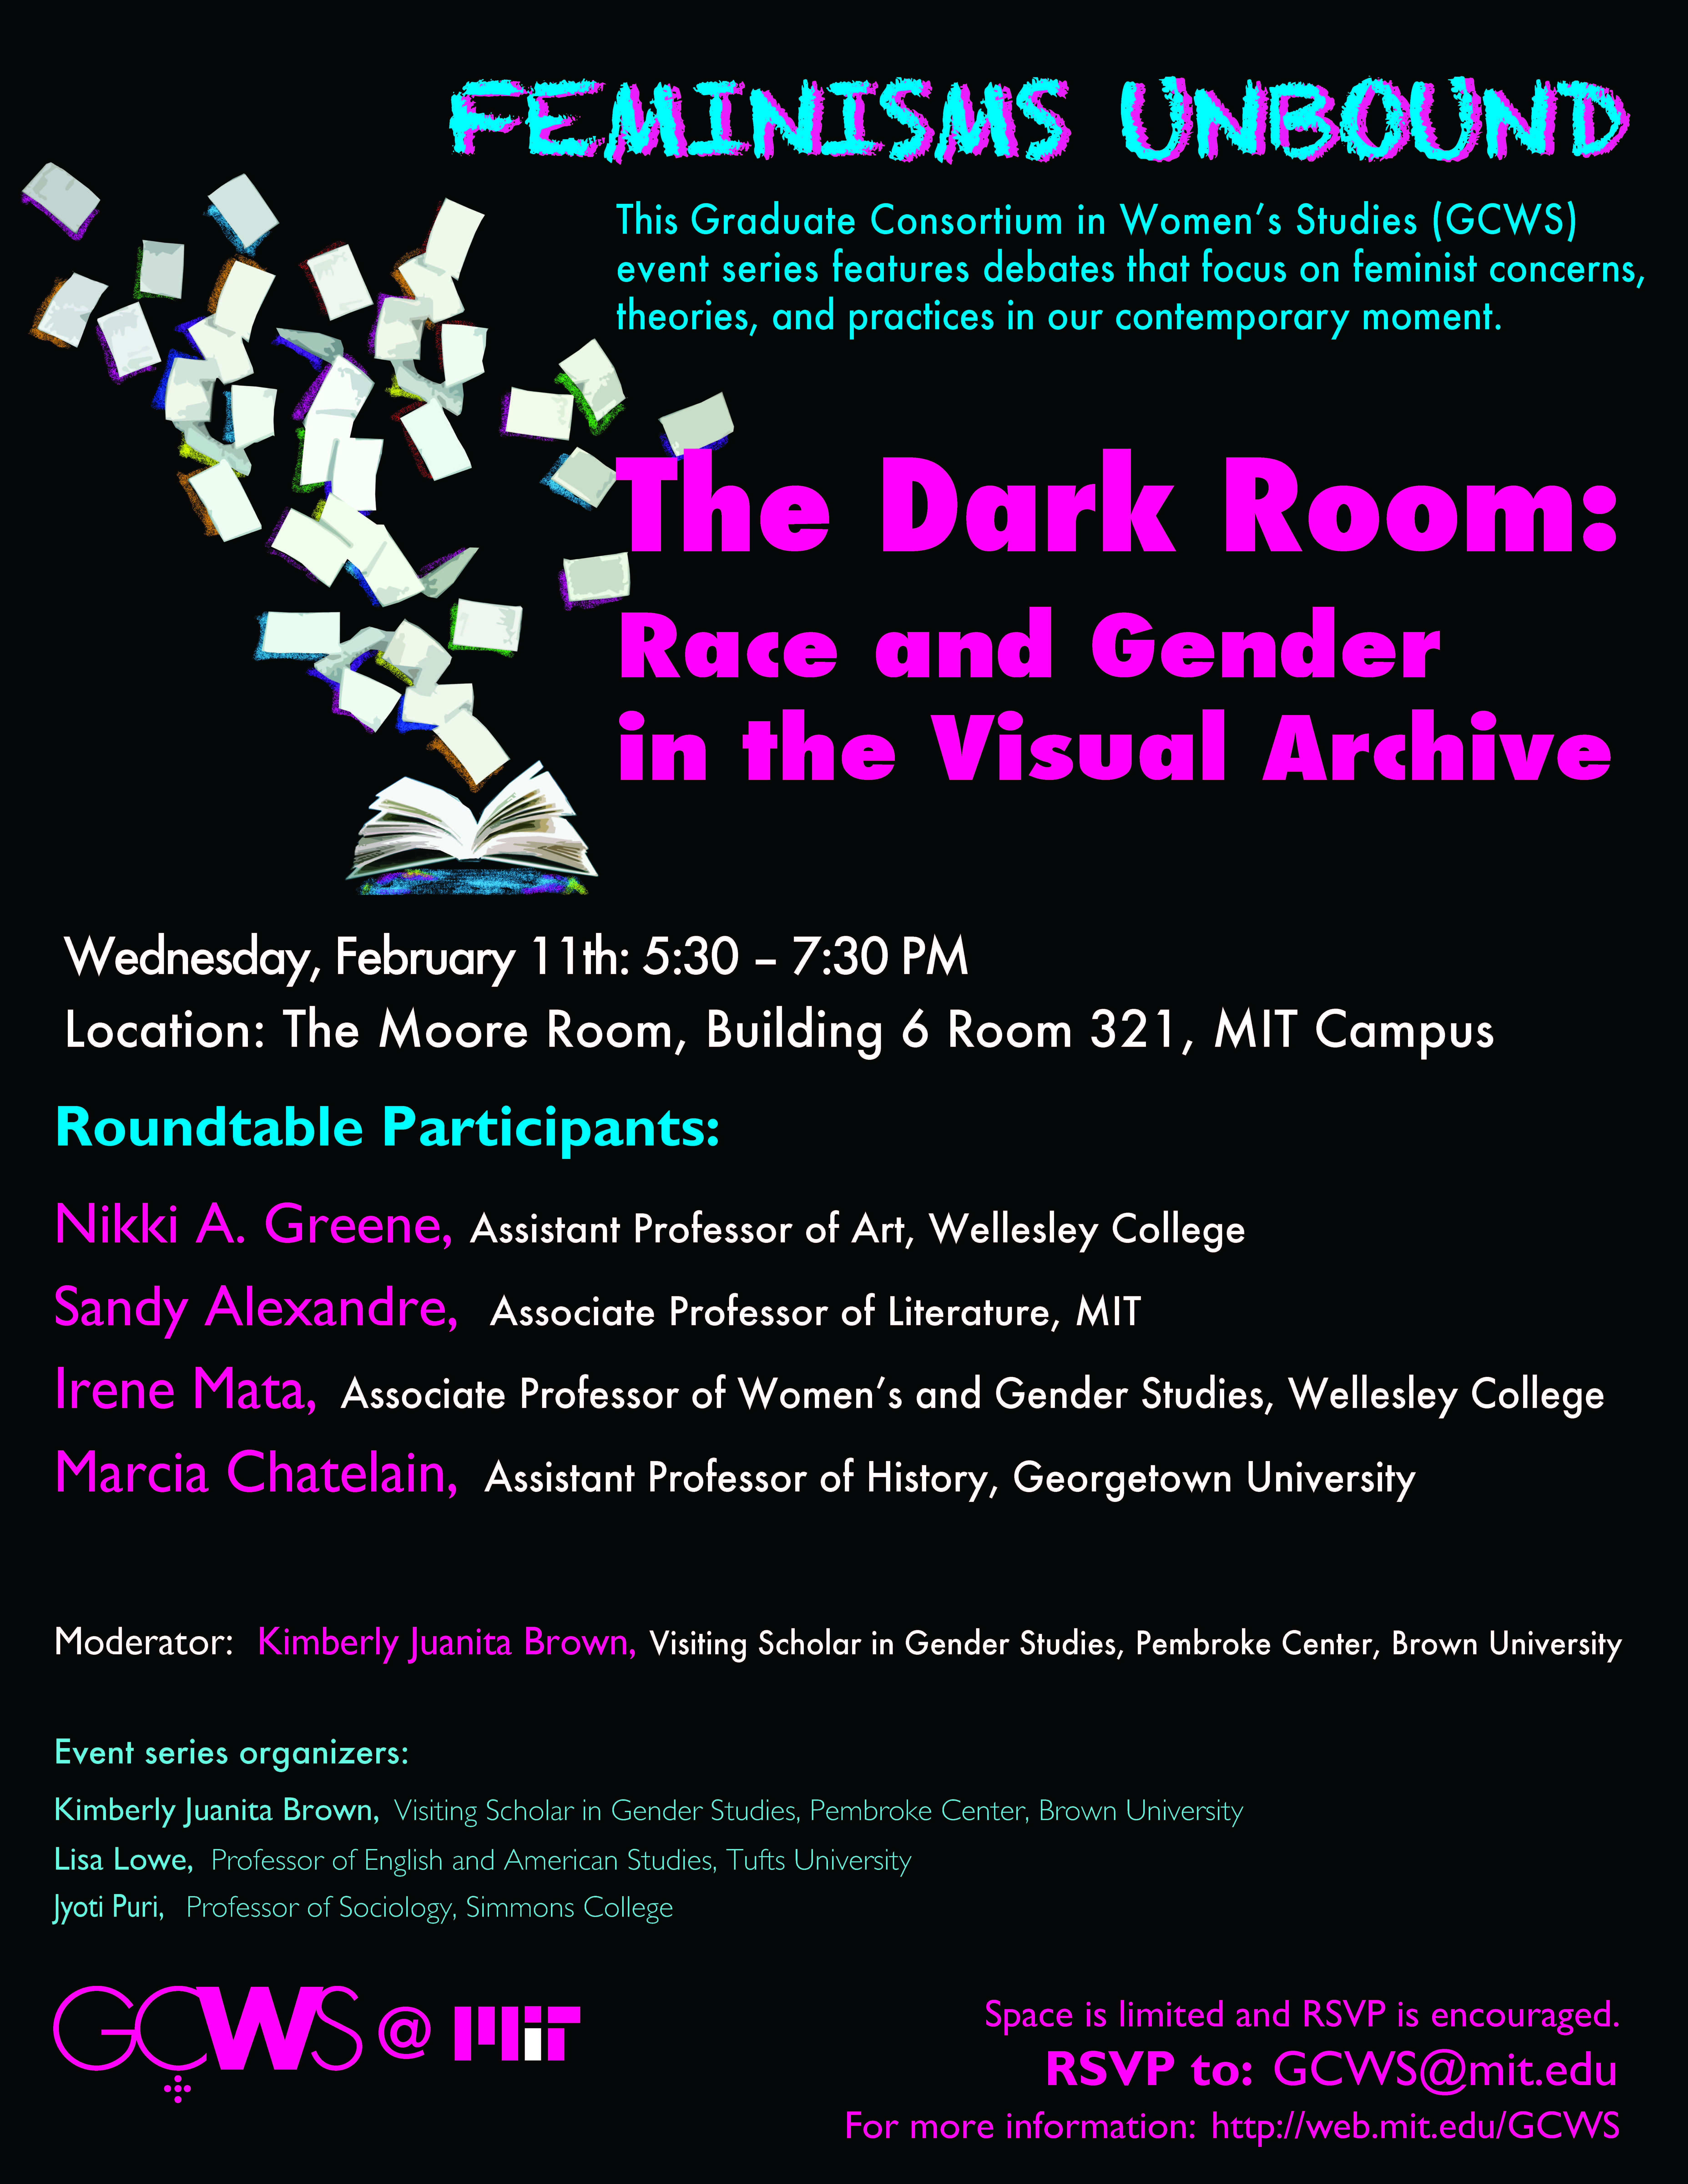 The Dark Room poster11.24.14